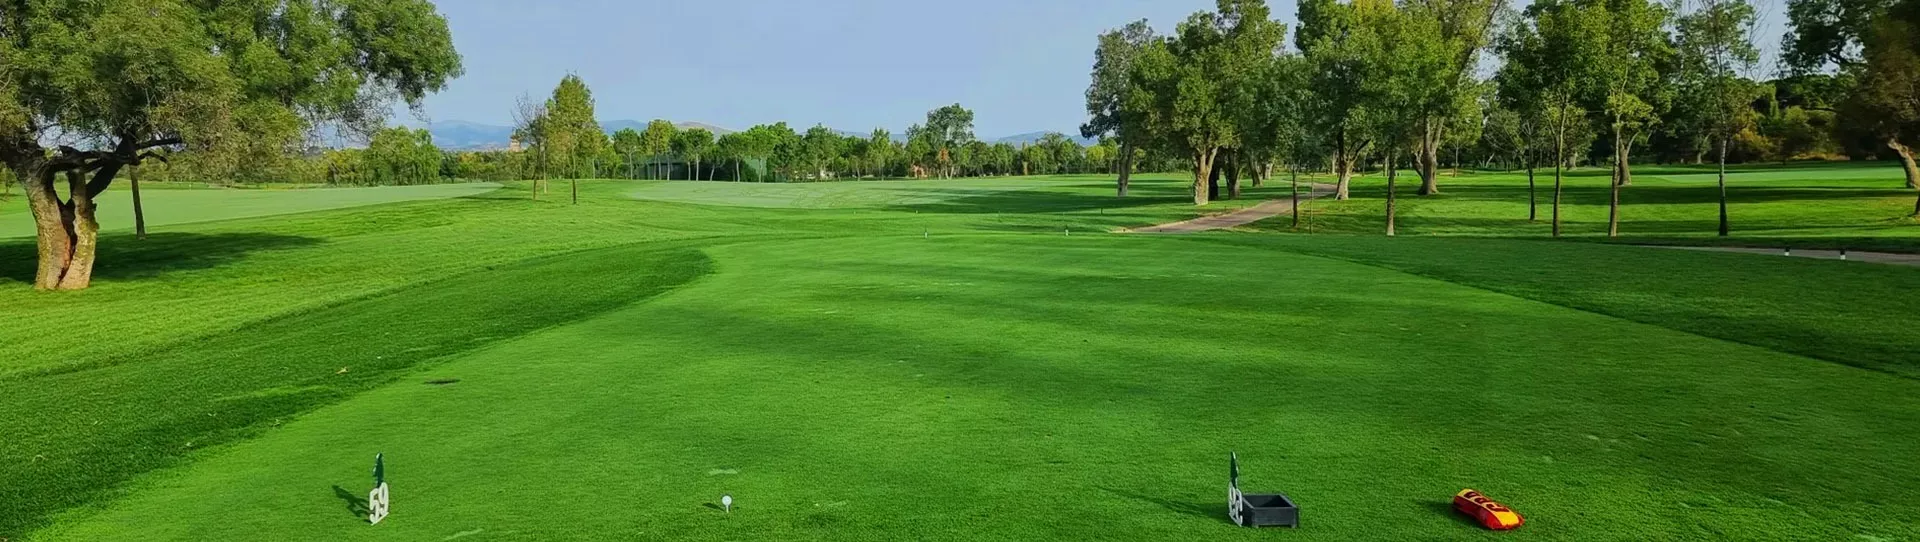 Spain golf courses - La Moraleja Golf Course III - Photo 6